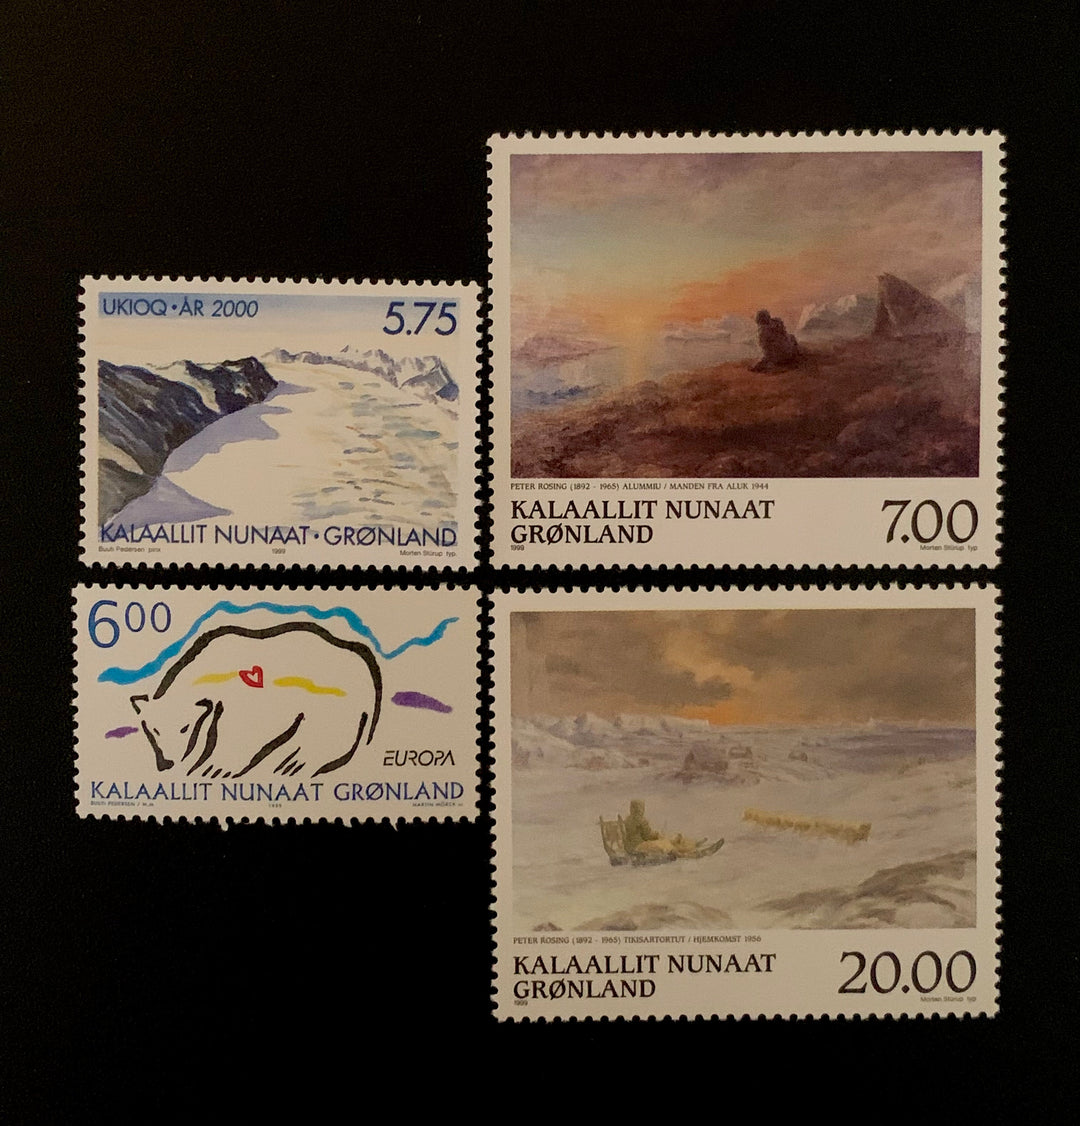 Greenland - Original Vintage Postage Stamps- 1999 - Polar Bear, Milenium, Art - for the collector, artist or crafter -journals, scrabooks